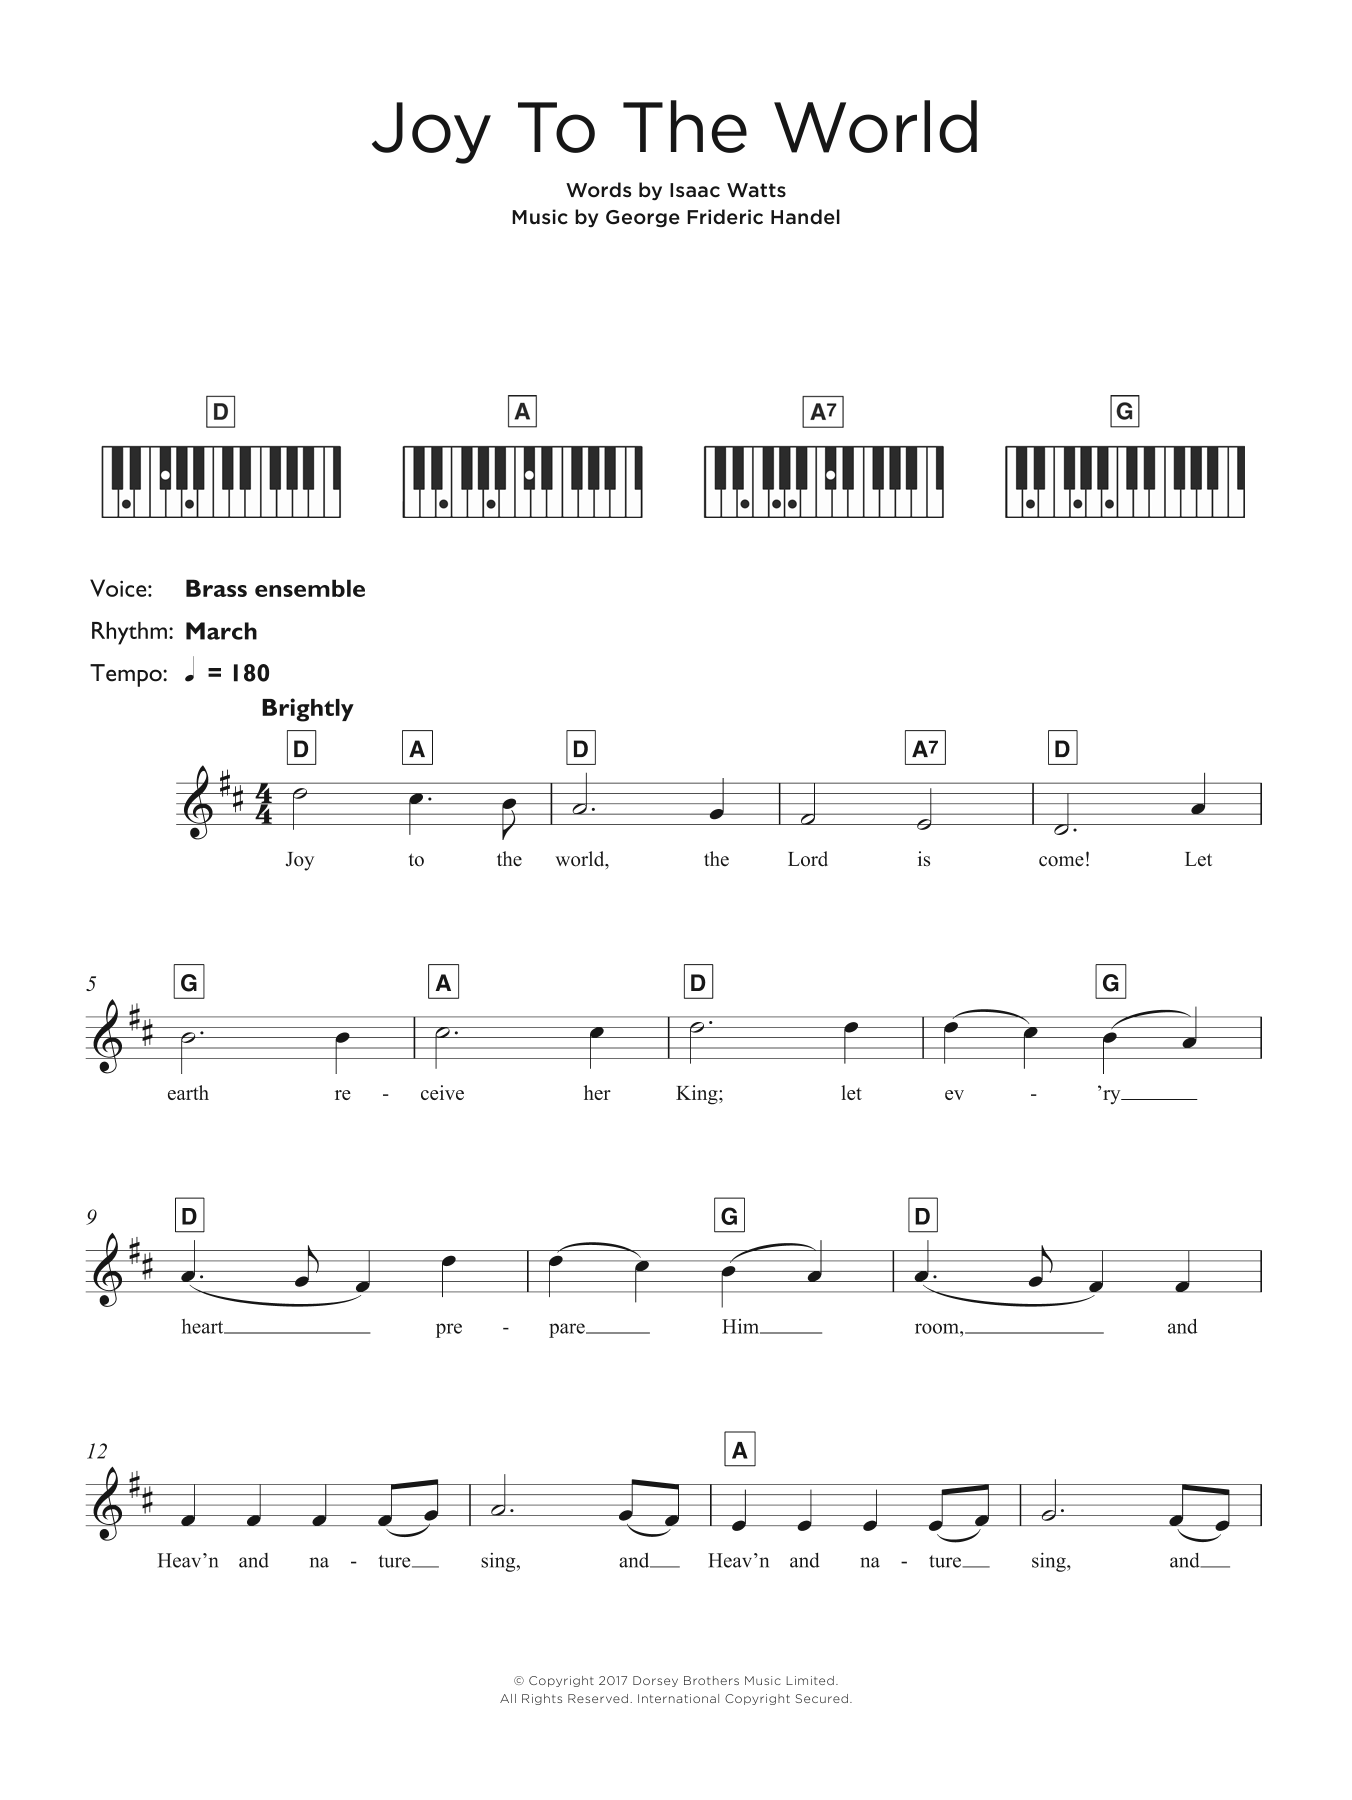 Christmas Carol Joy To The World Sheet Music Notes & Chords for Lyrics & Chords - Download or Print PDF